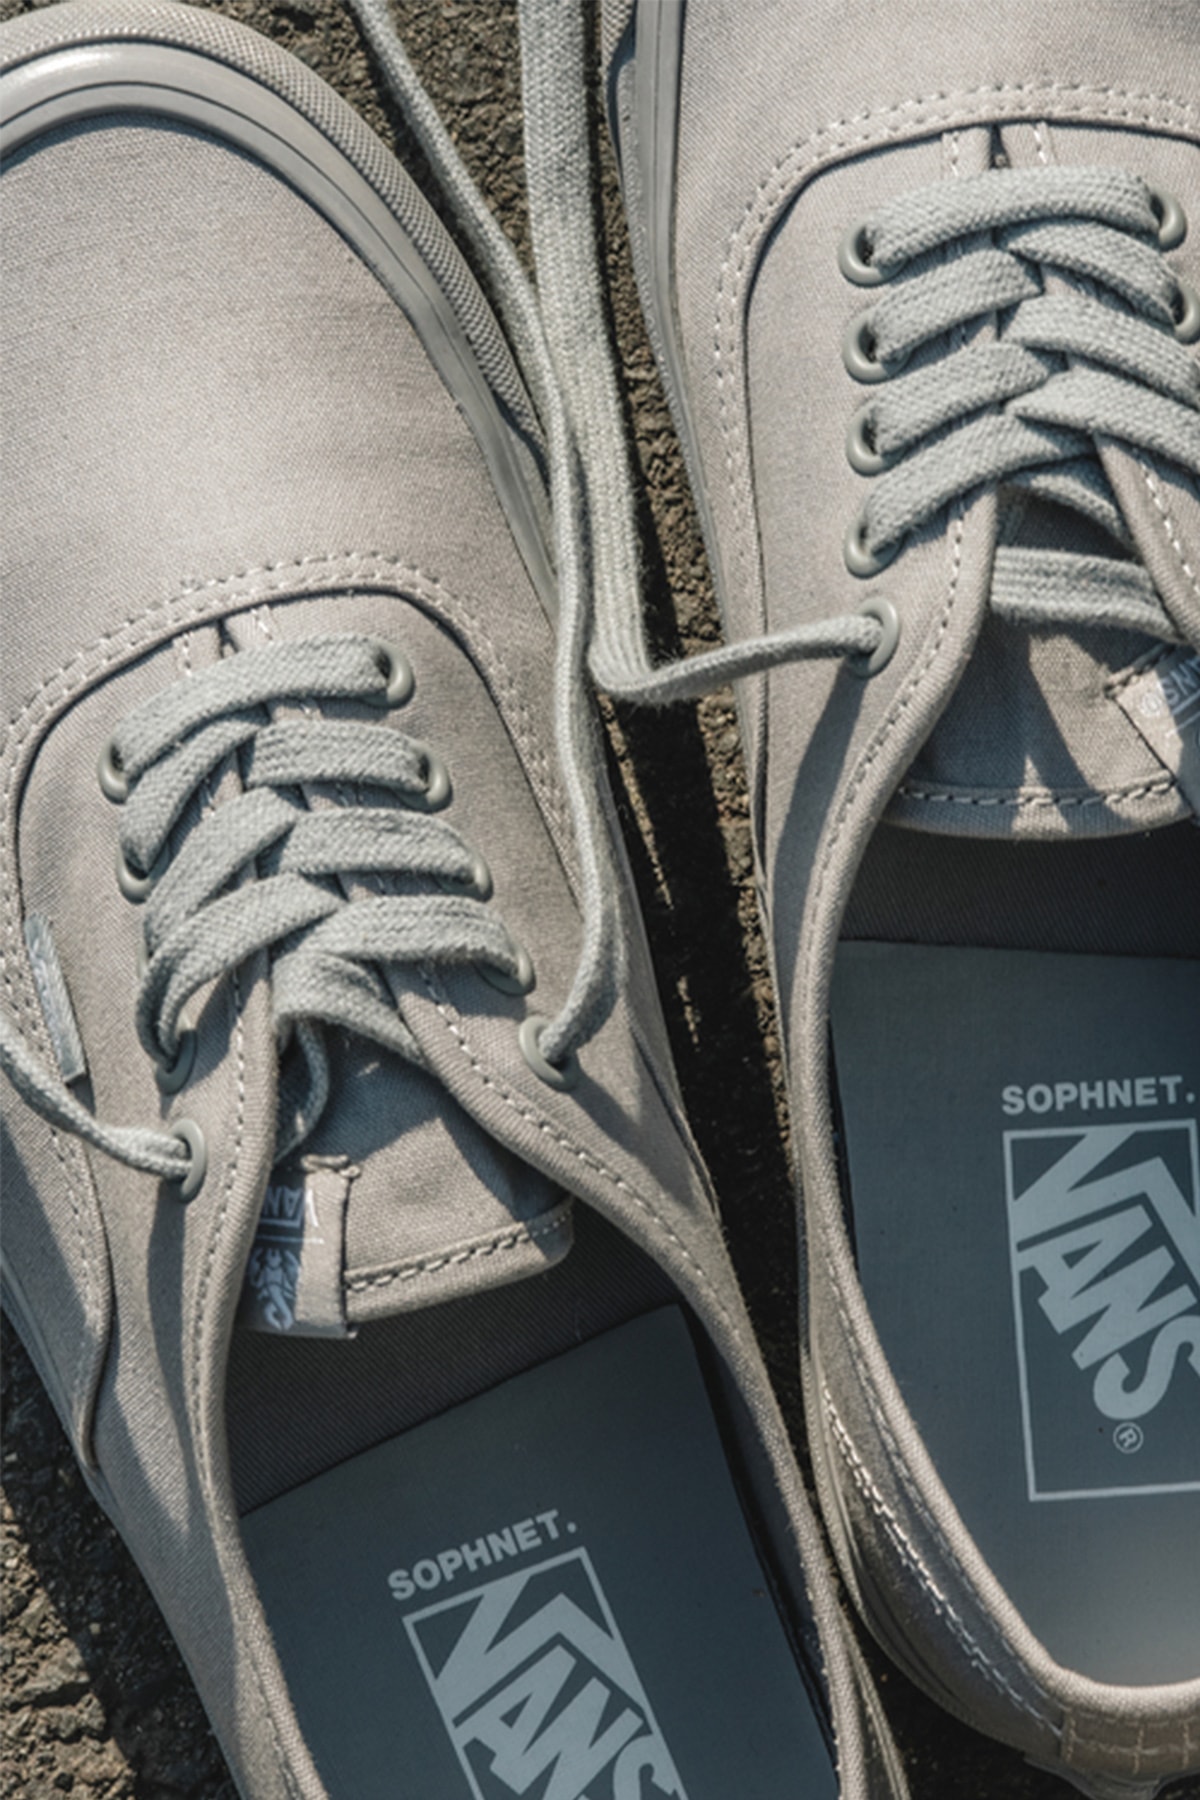 SOPHNET. x Vans 全新聯名系列鞋款正式發佈